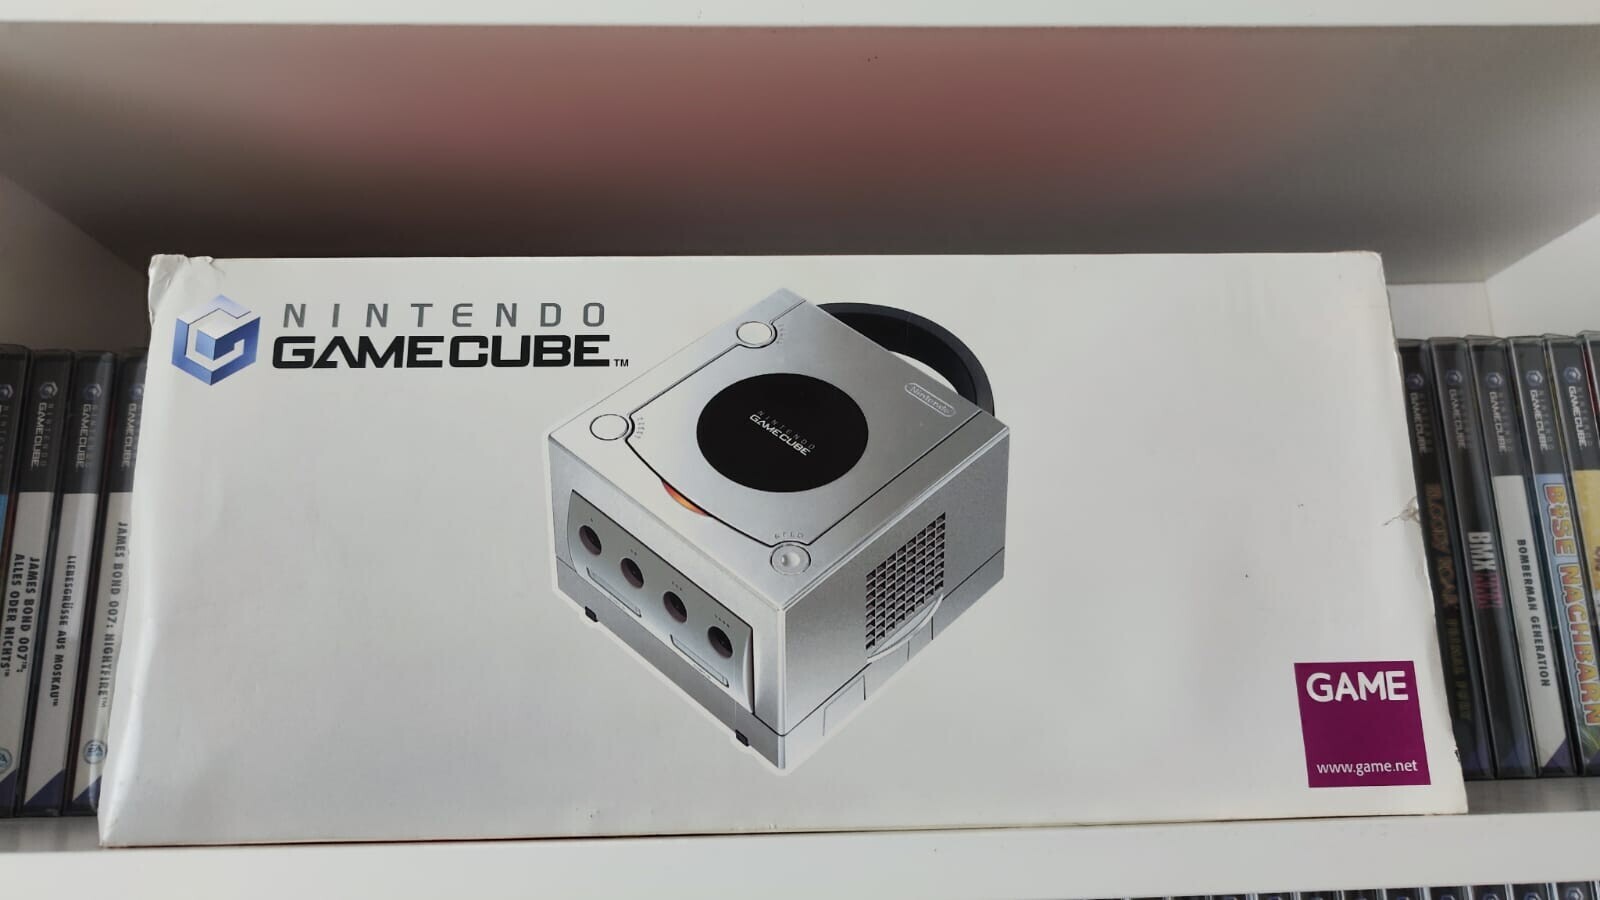  Nintendo Gamecube Game.net Resell Box 